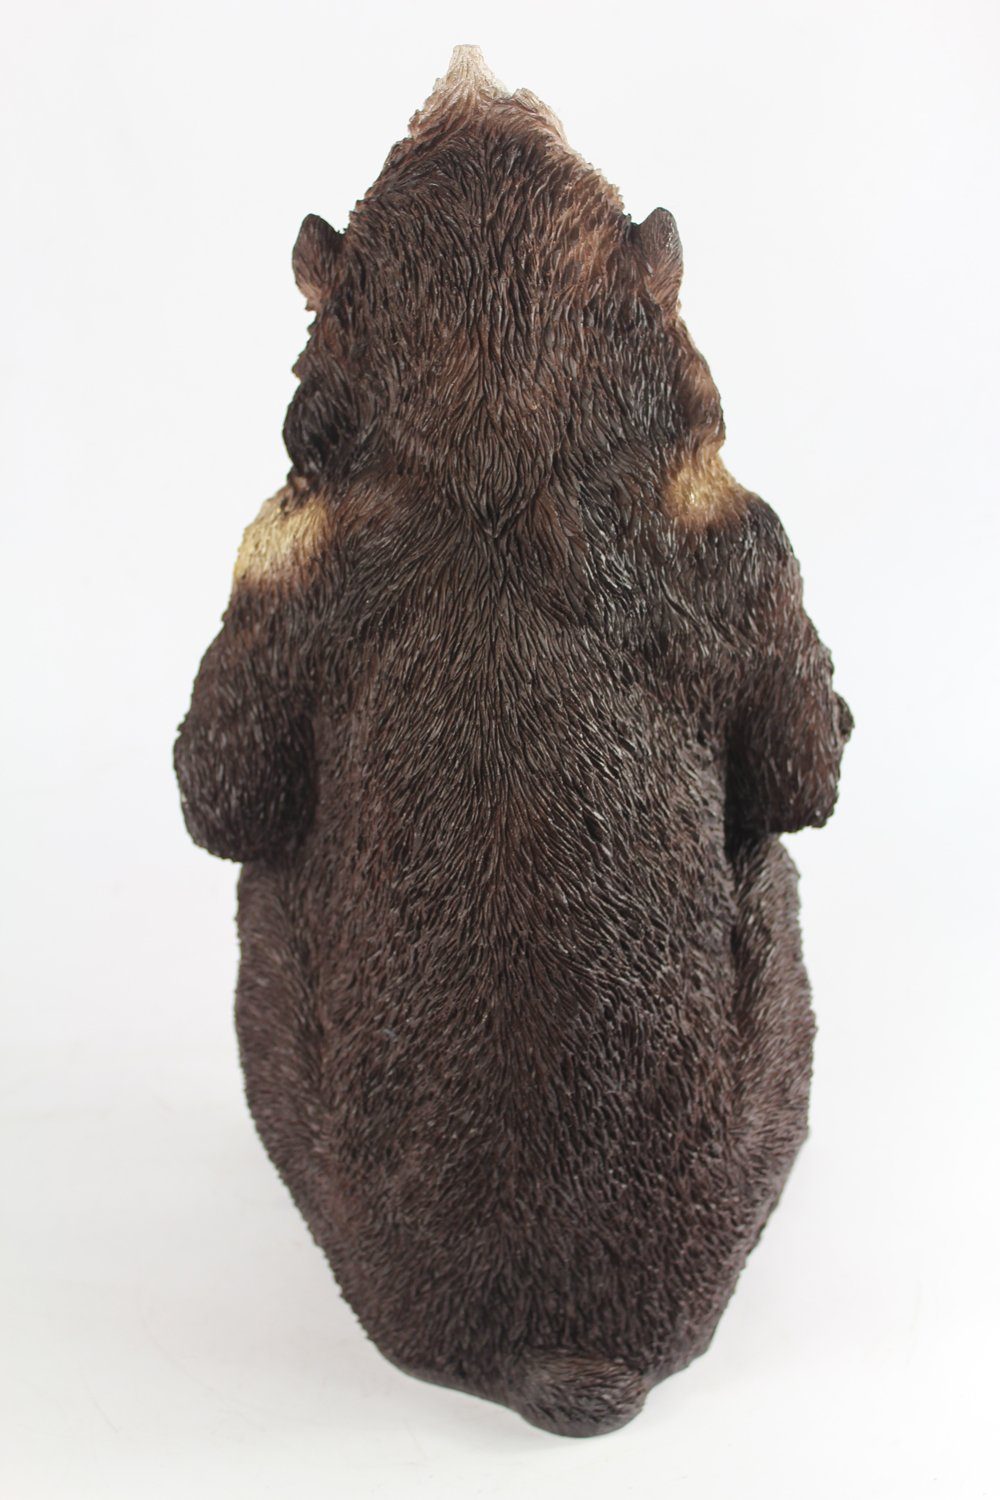 Mandrill Tierfigur, Arnusa 43 cm lebensecht, Gartenfigur Dekofigur Gartendekoration Affe